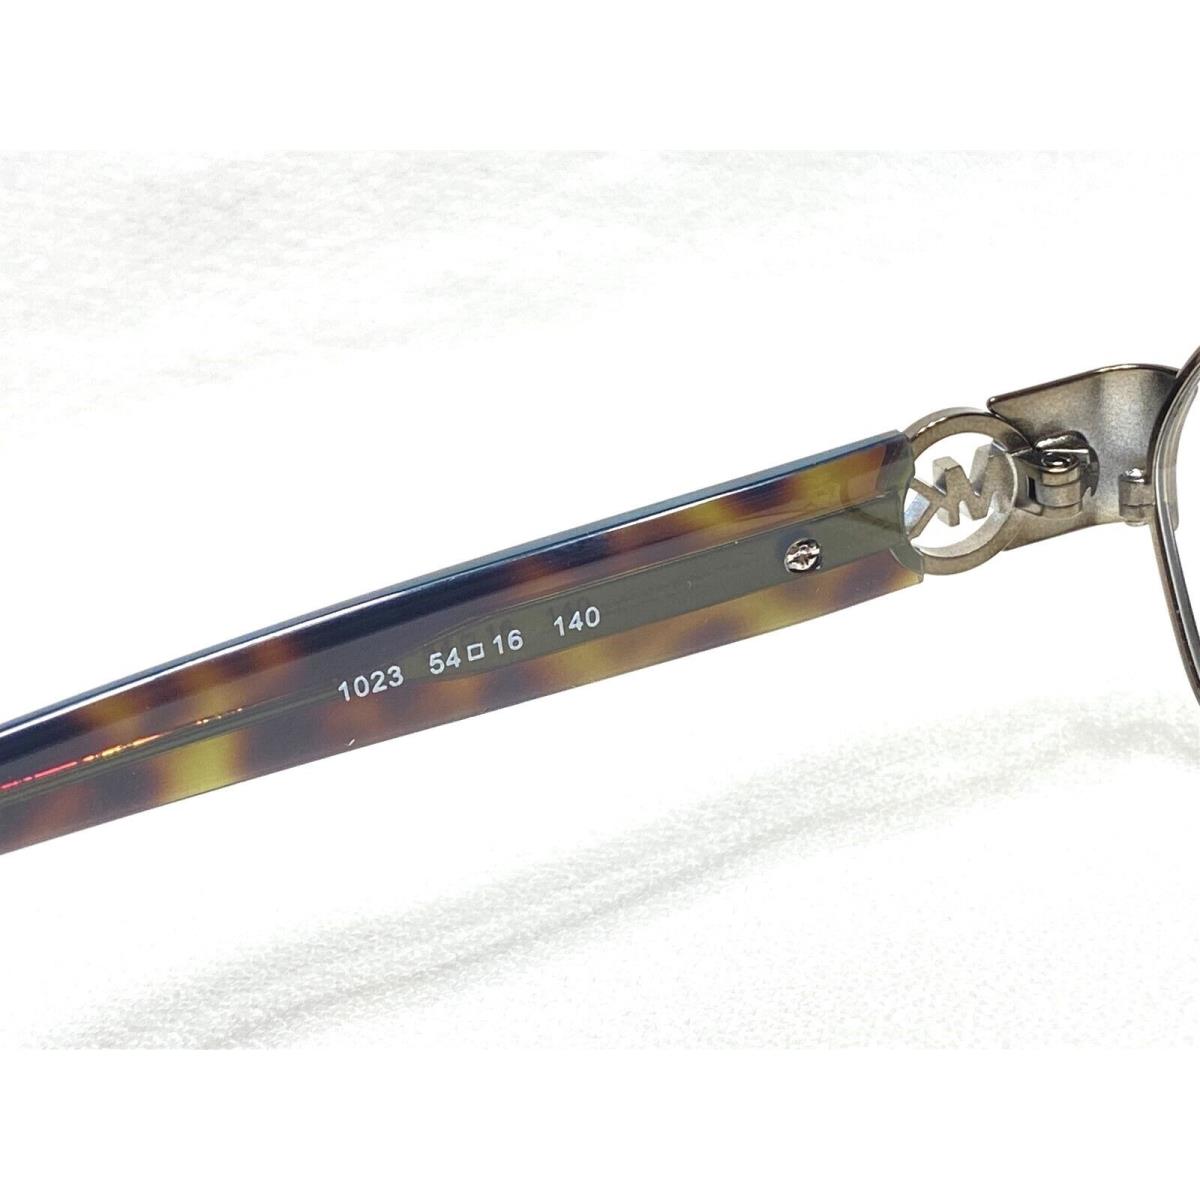 Michael Kors eyeglasses  - Brown & Tortoise , Brown & Tortoise Frame, 1023 Manufacturer 2